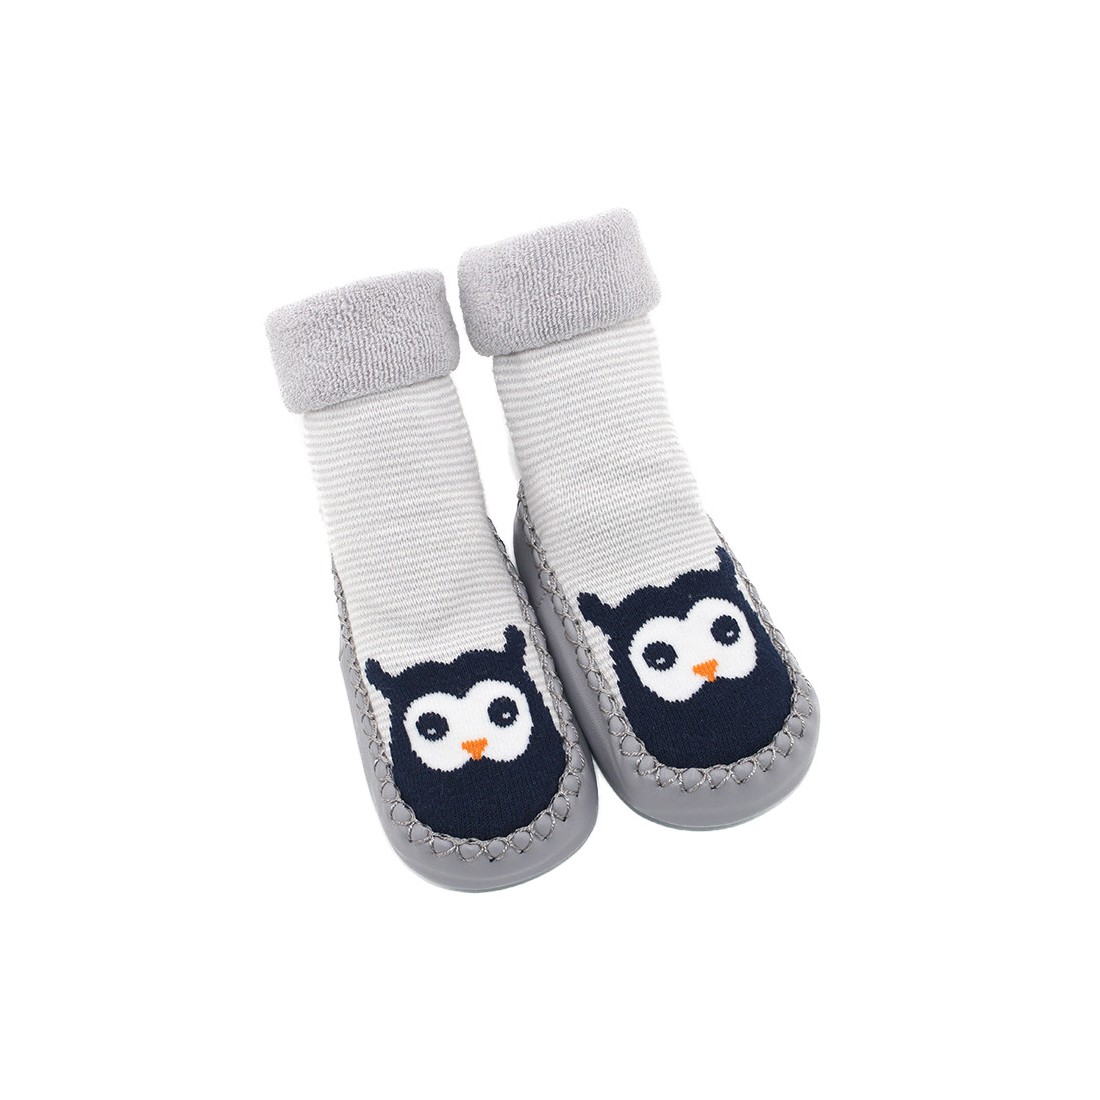 Totsi Tribe 4 - Comfy Non-Slip Baby Slipper Socks